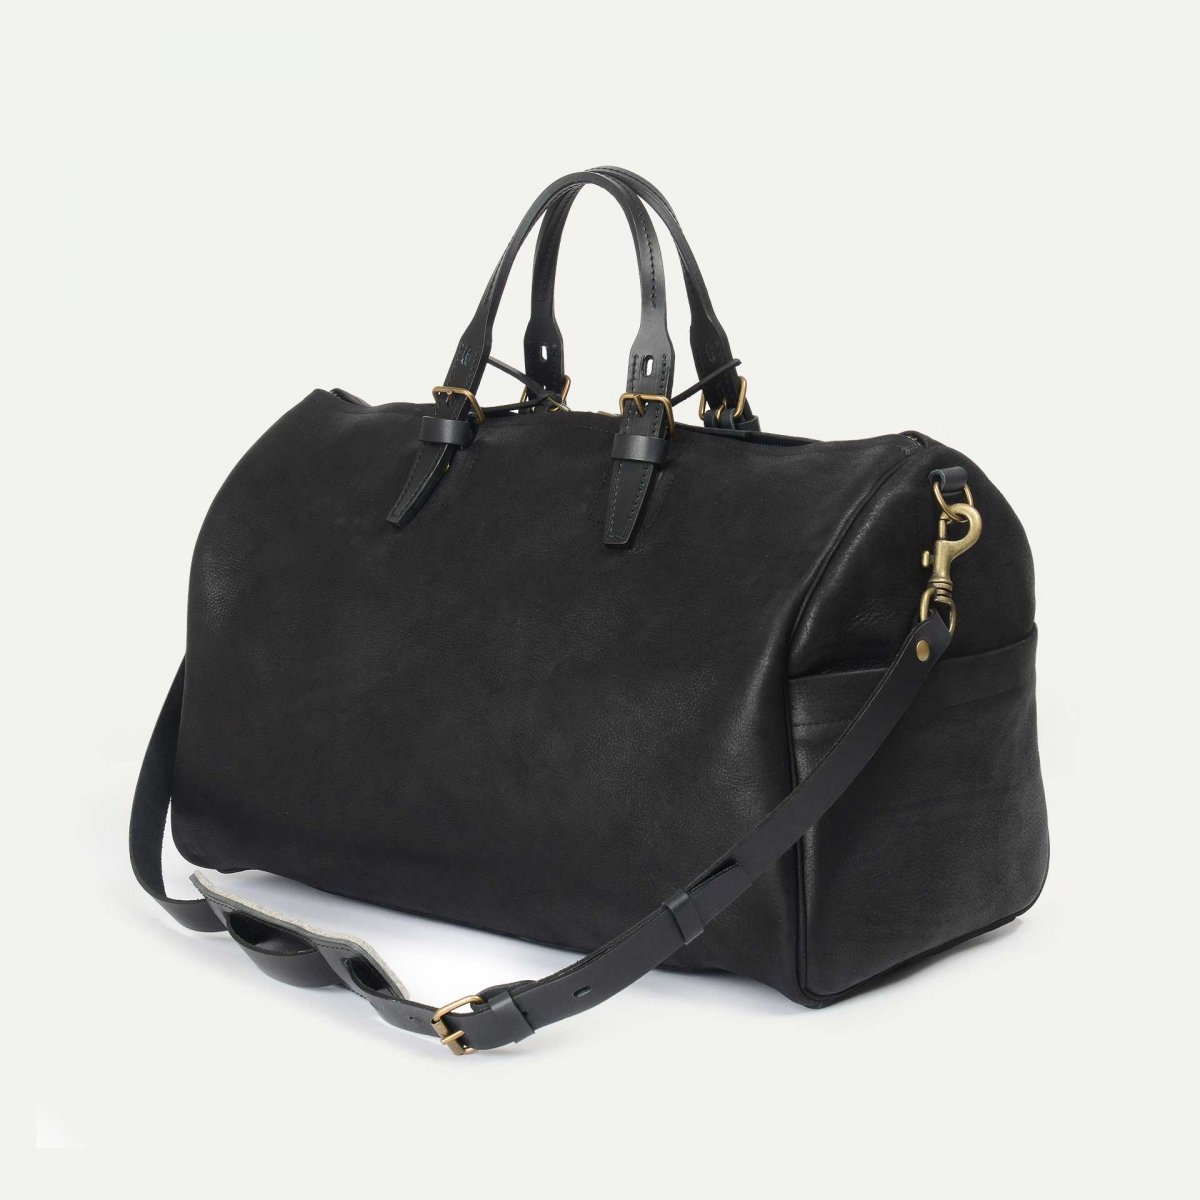 Hobo Travel bag - Charcoal black / Waxed Leather (image n°4)